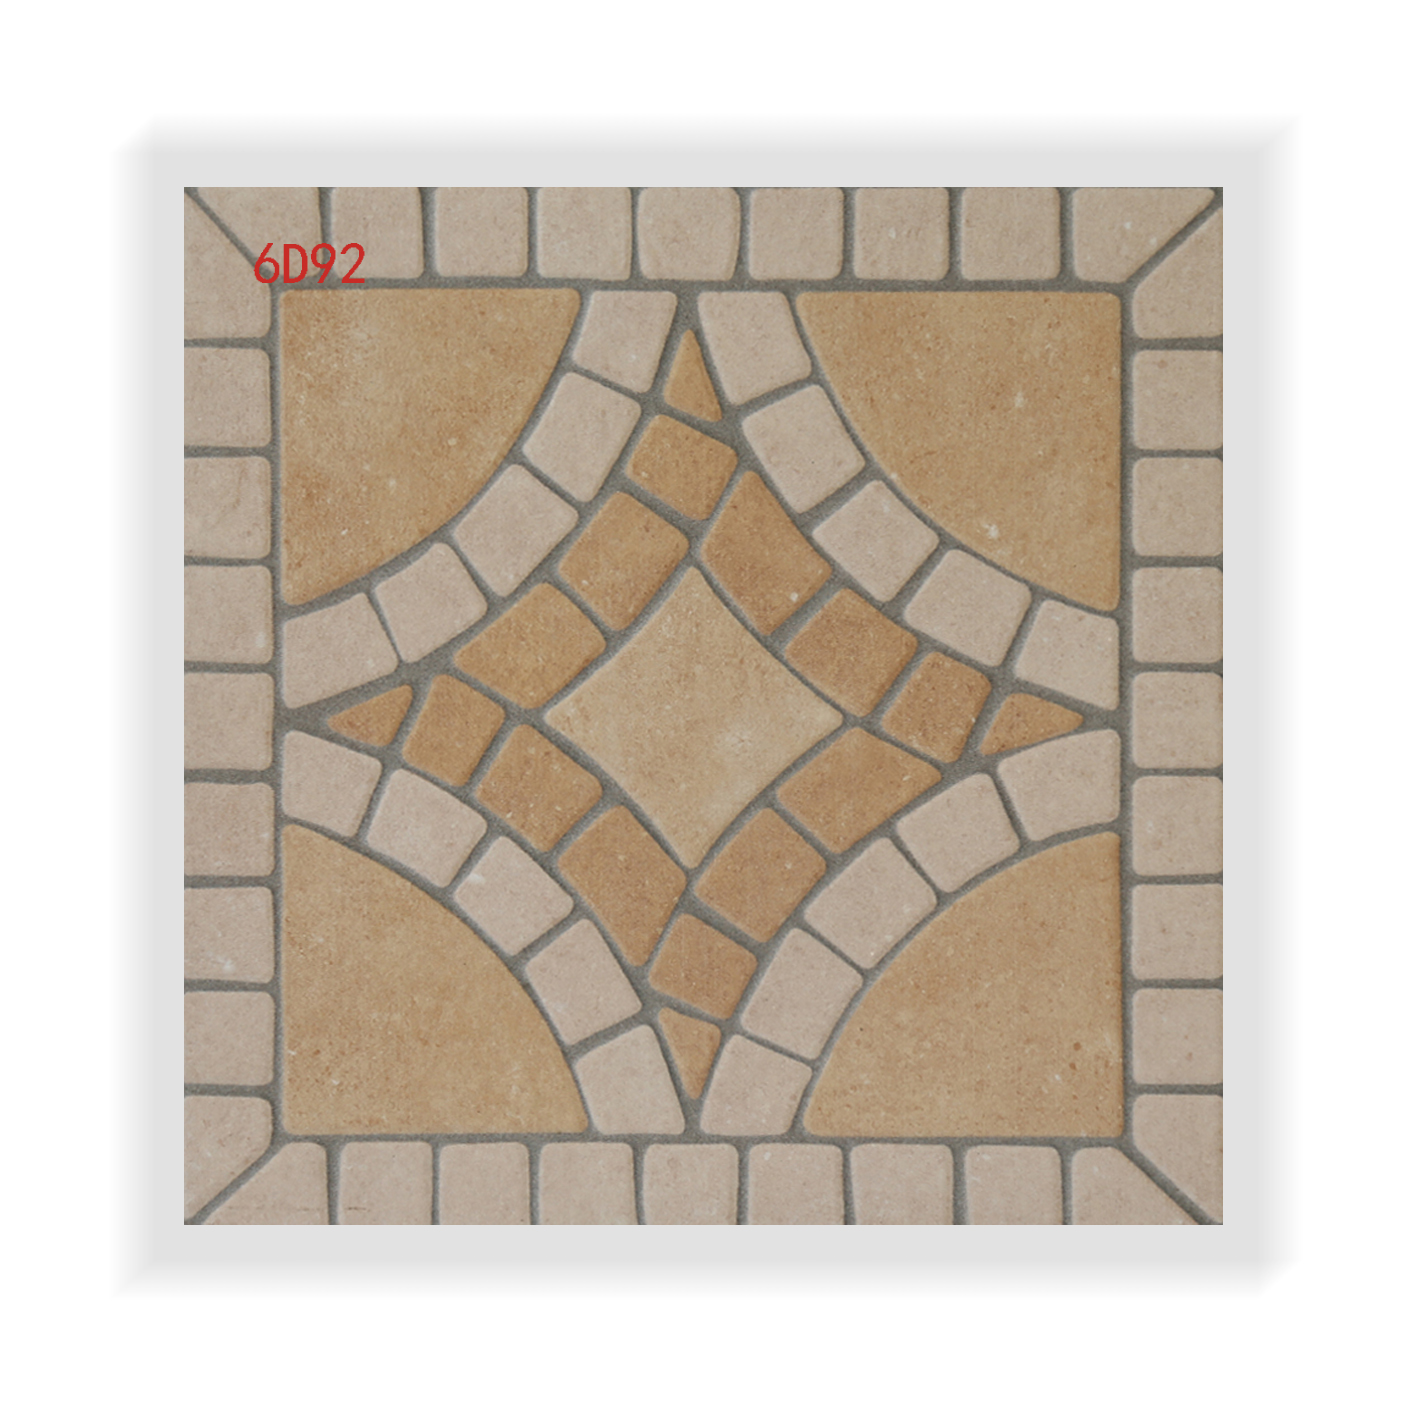 Rustic tile